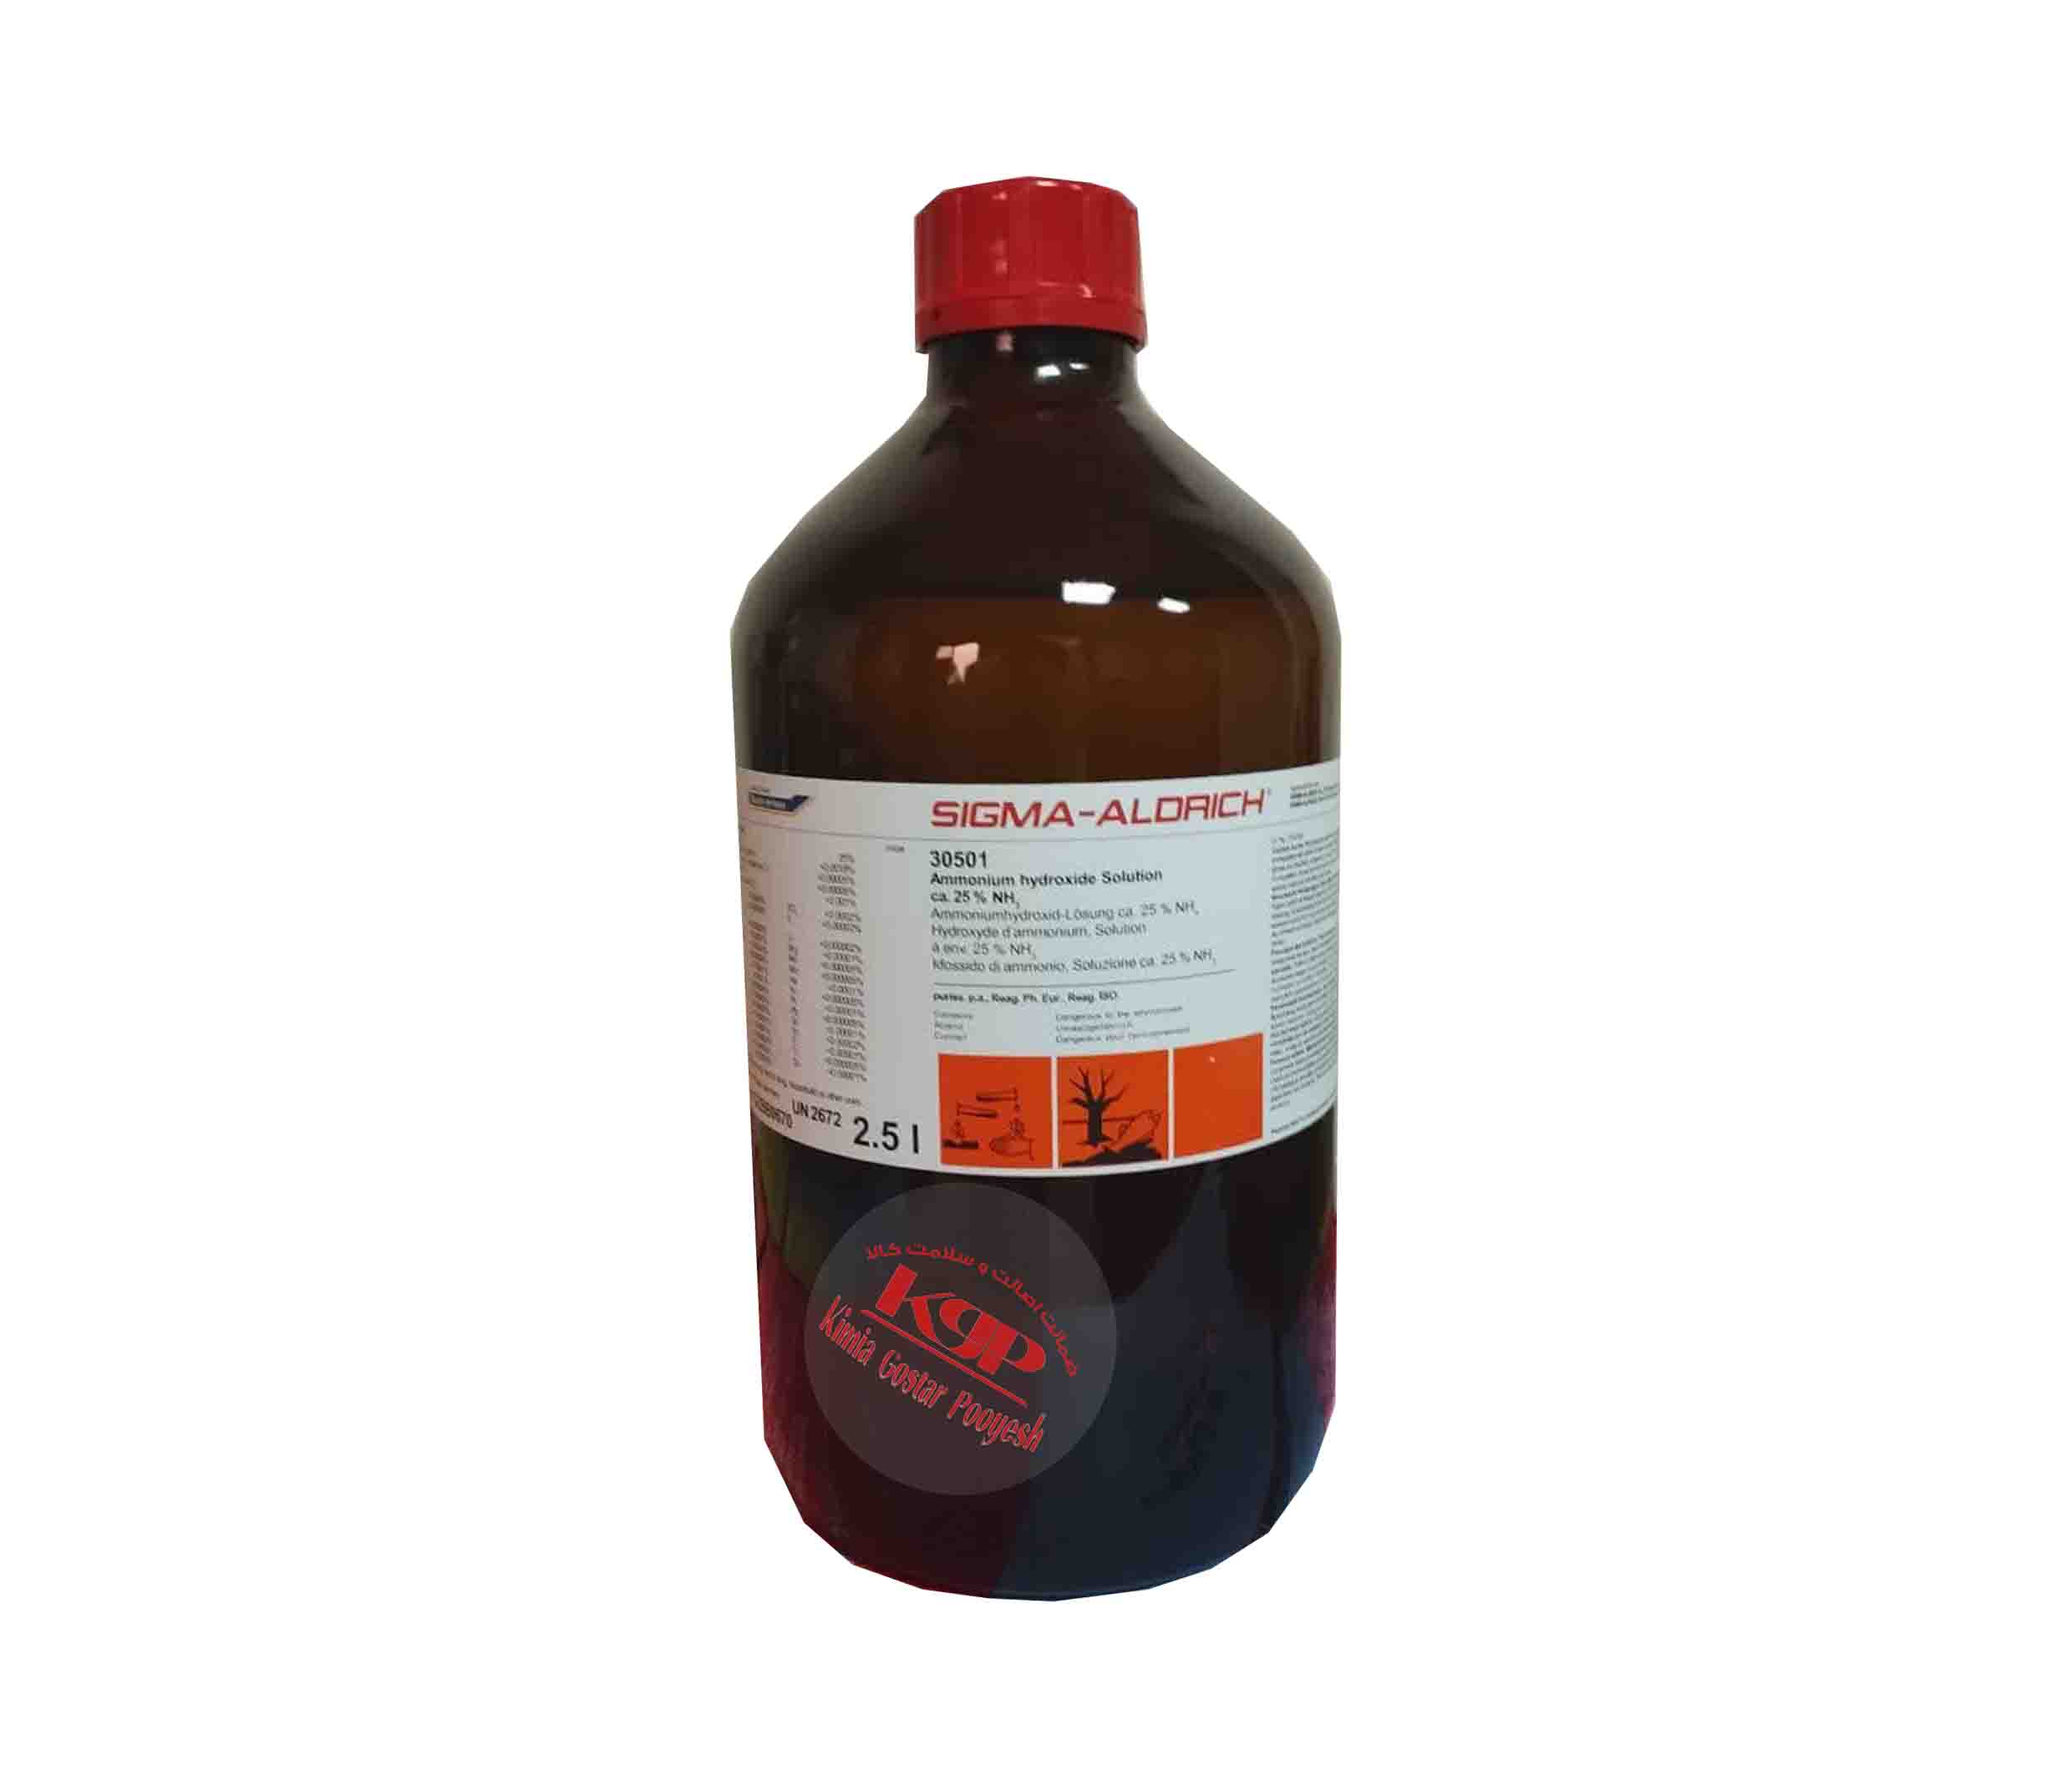 Ammonium hydroxide solution